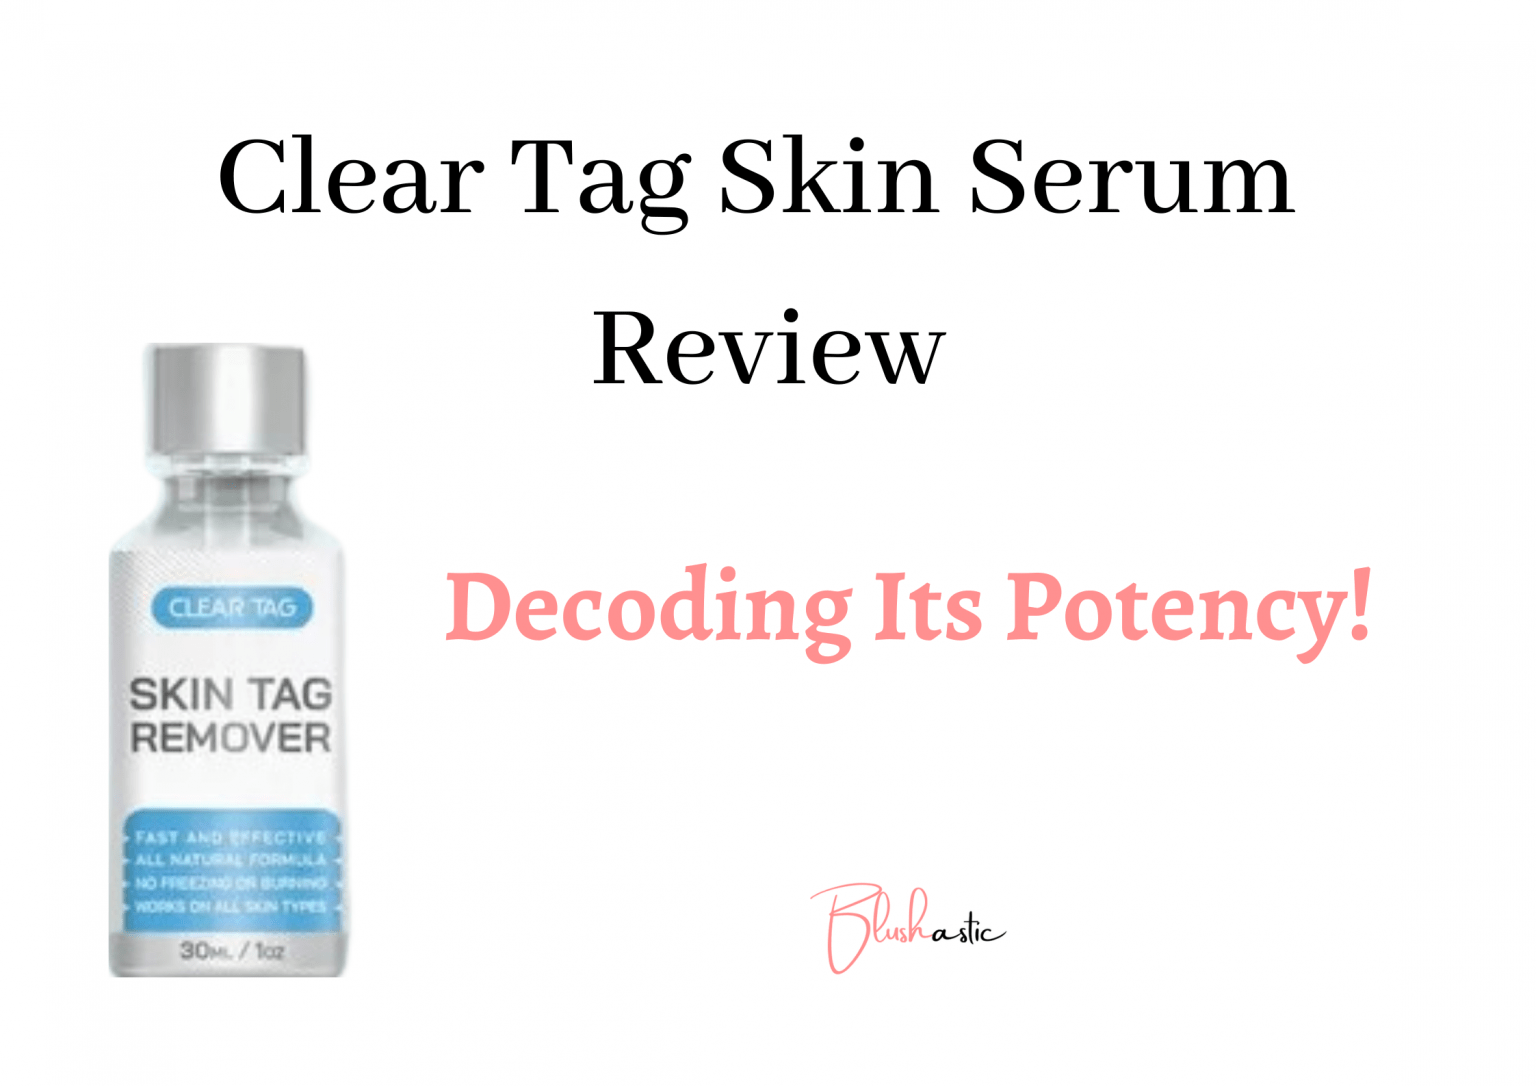 Clear Tag Skin Serum Reviews | Gimmick? - Blushastic